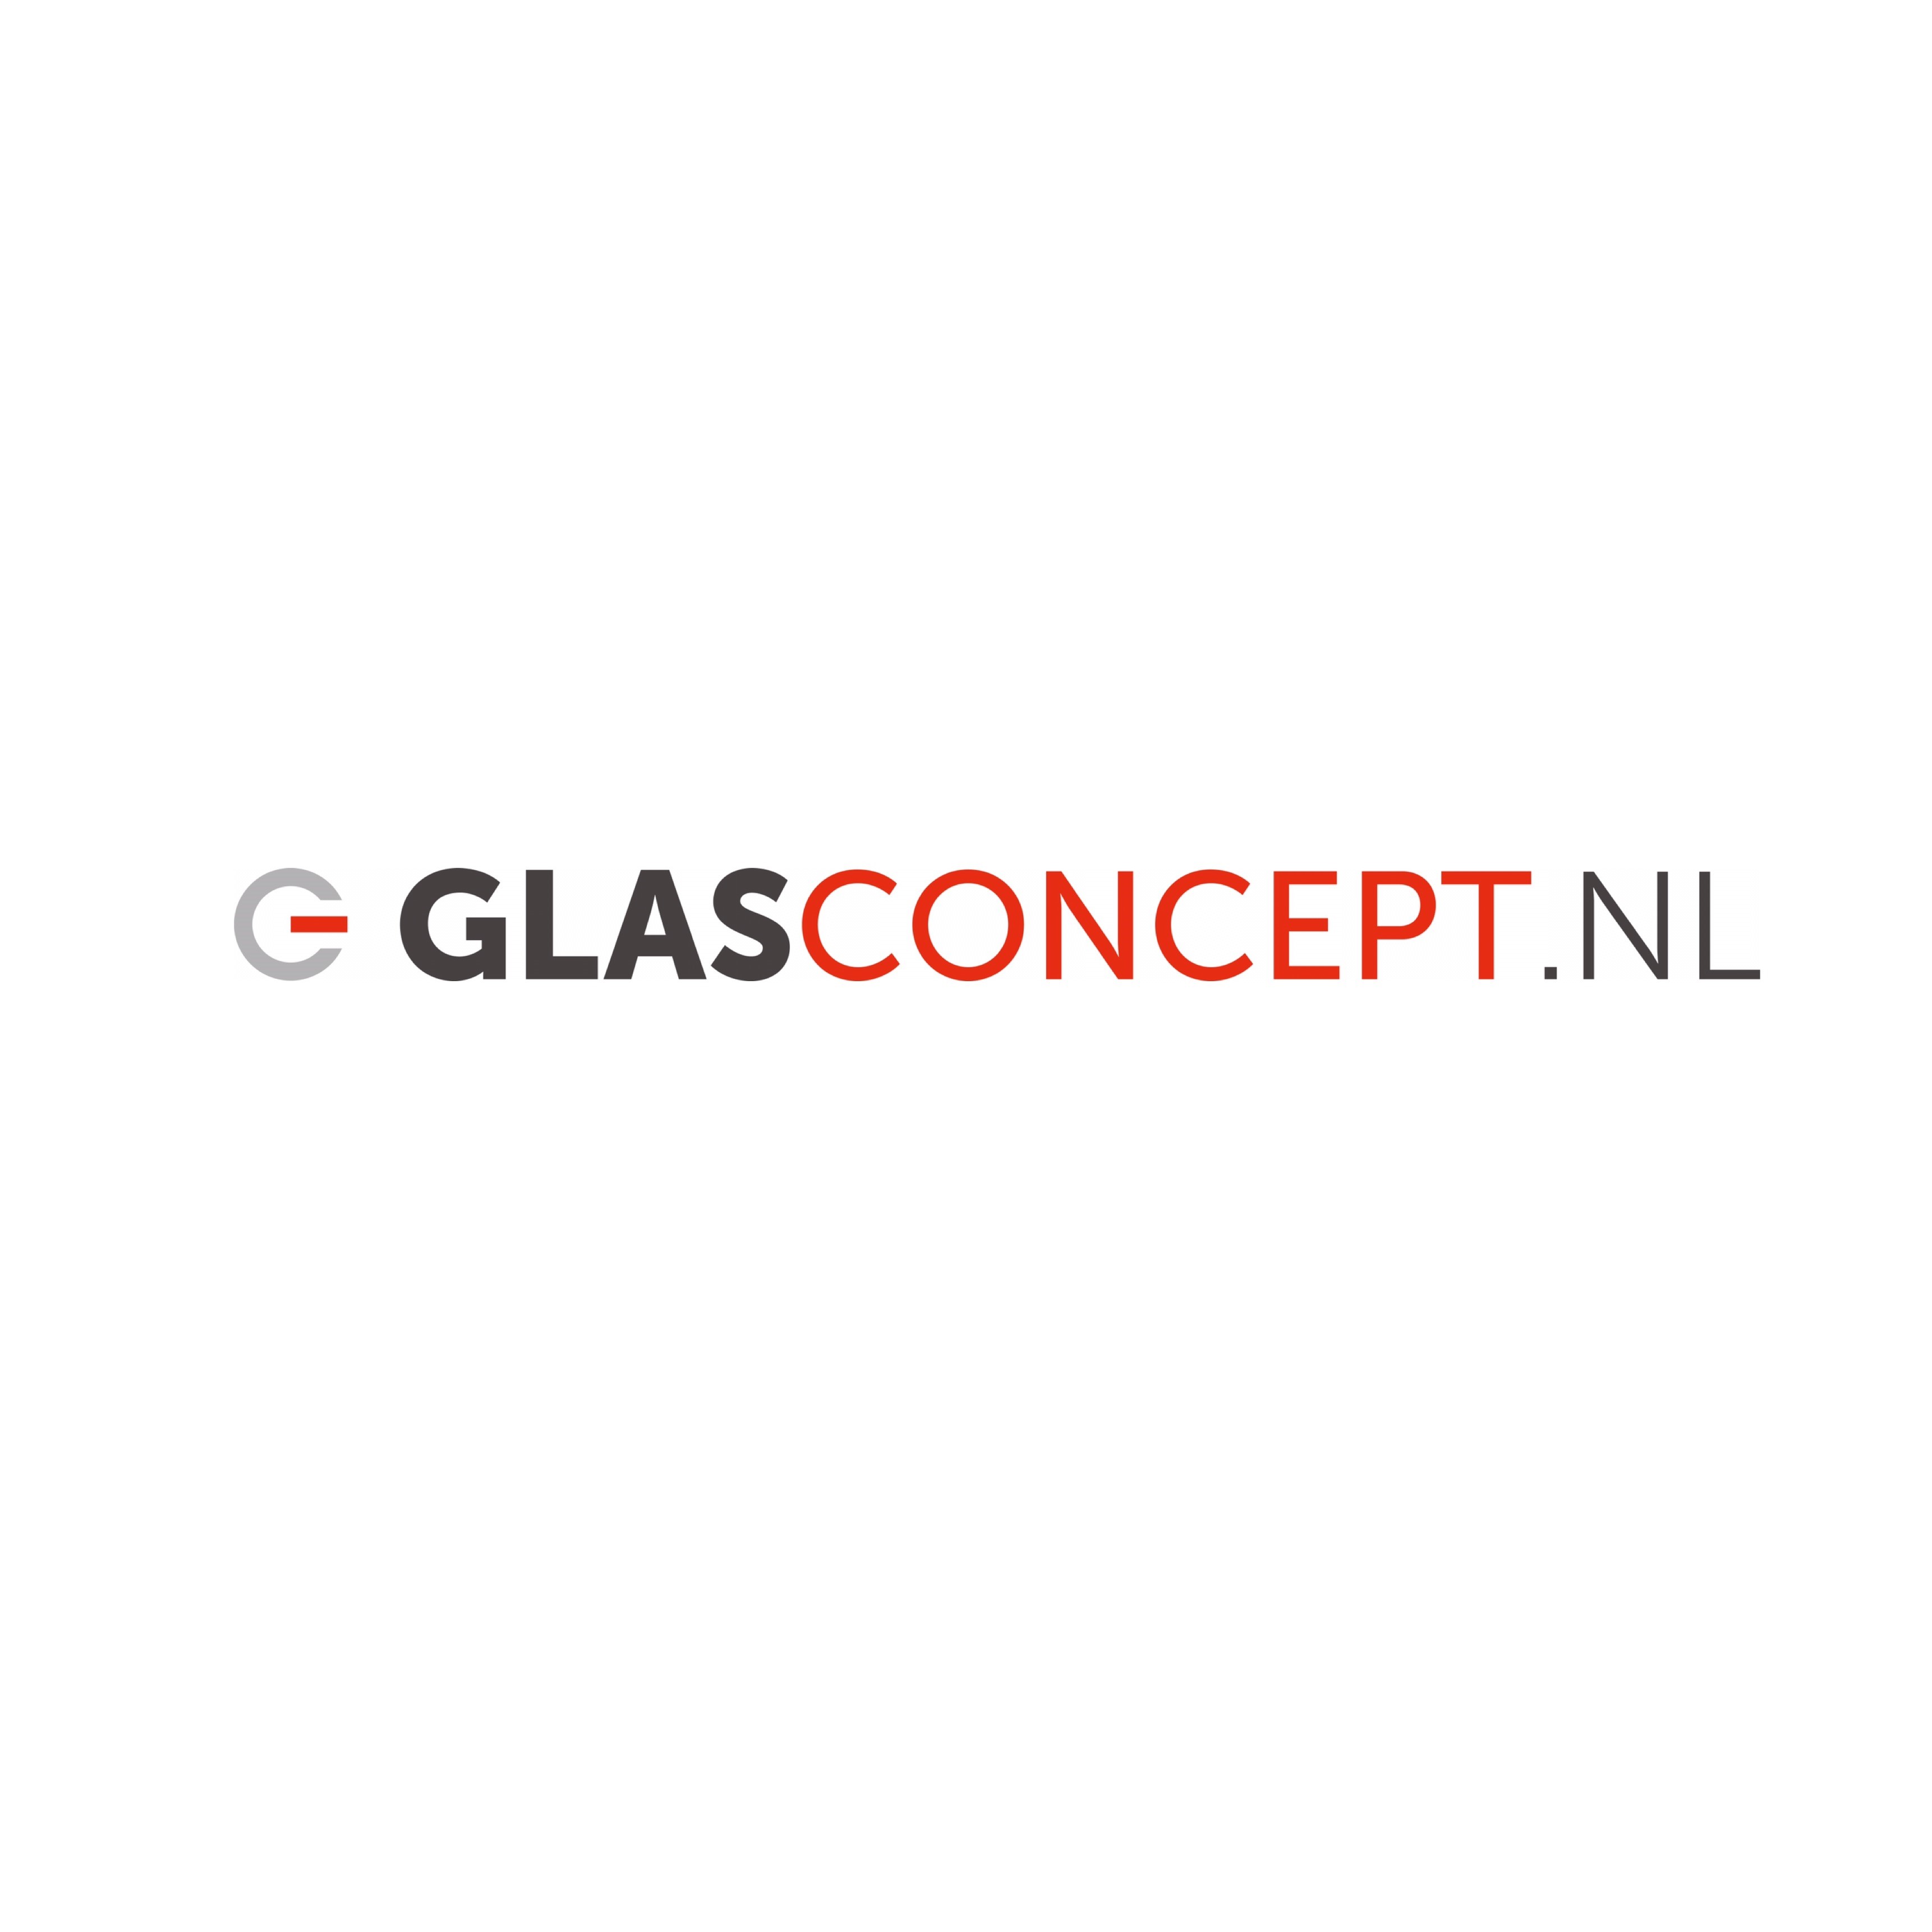 Bezoek Glasconcept.nl